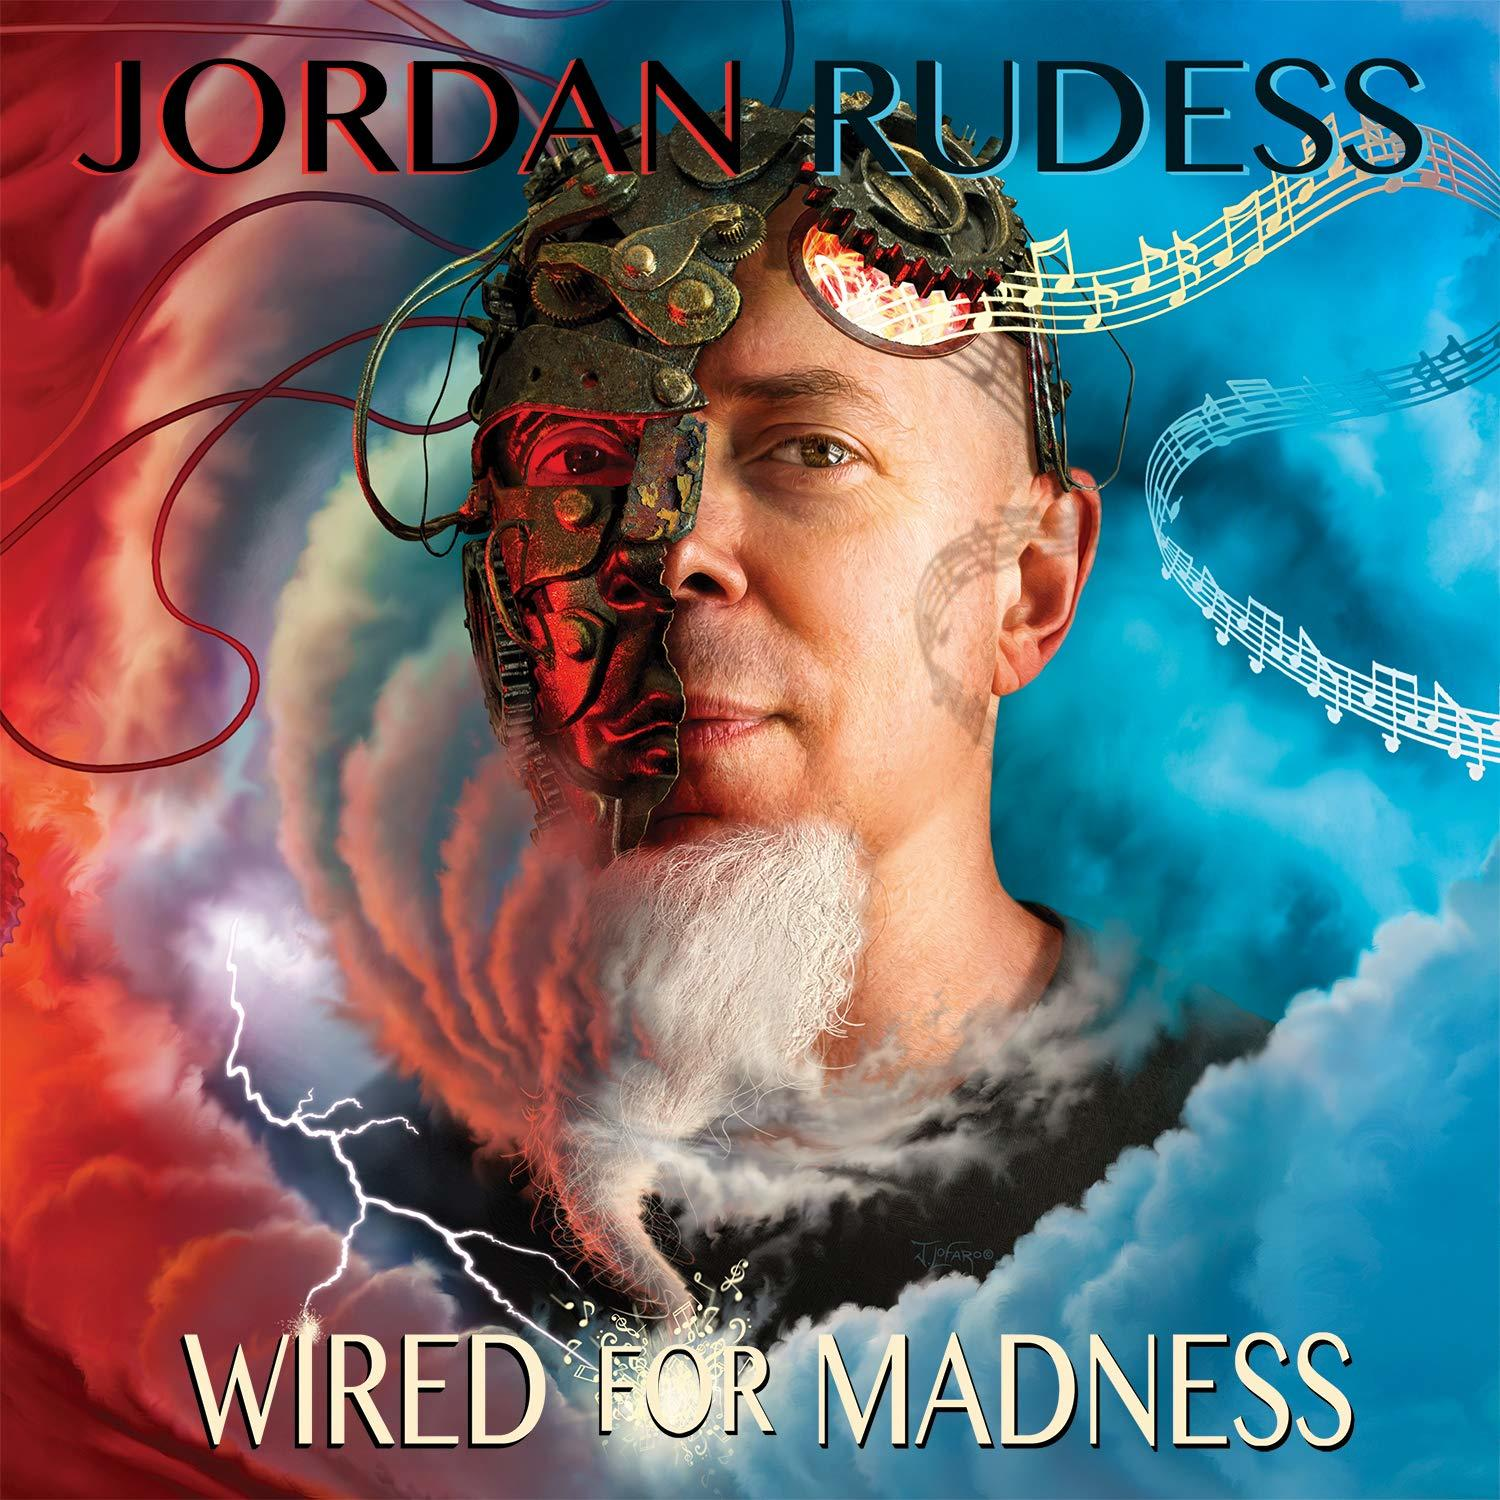 - (2LP Wired - Jordan Rudess (Vinyl) For Madness Gatefold+MP3)